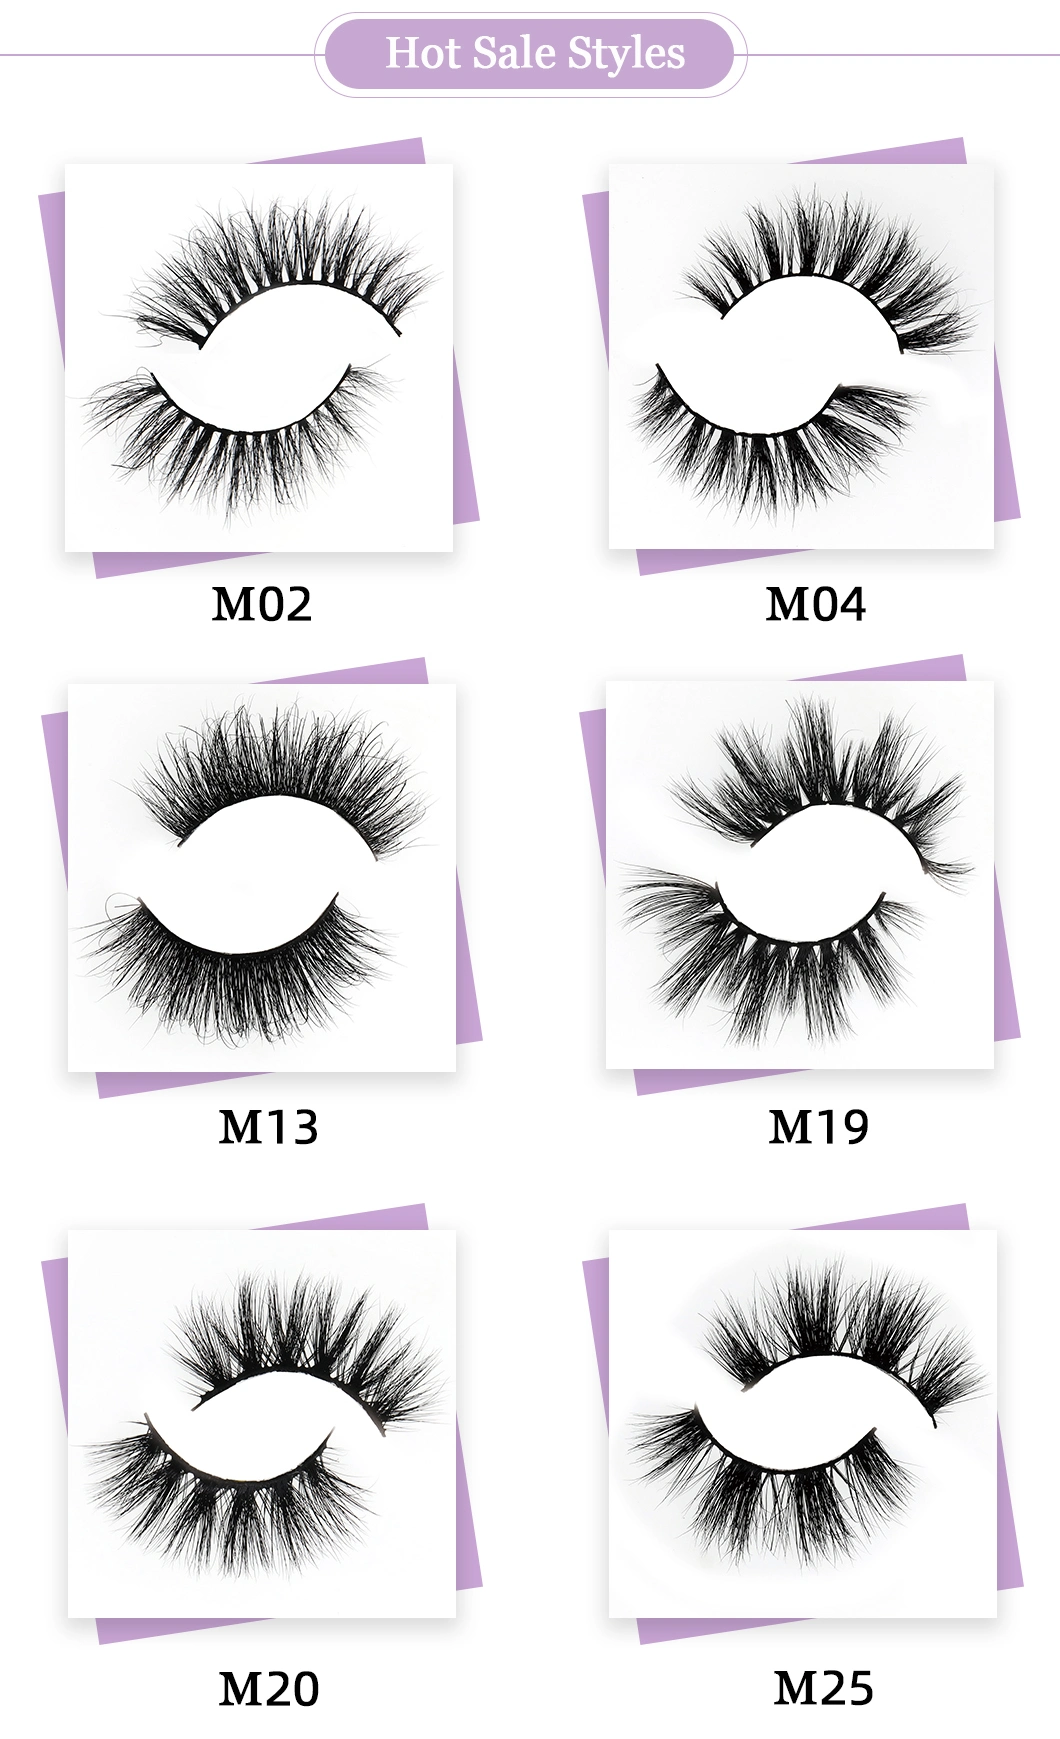 3D 5D Wholesale Cosmetics Eyelash High Quality Handmade Lashes 3D Real Mink Eyelashes for Make up